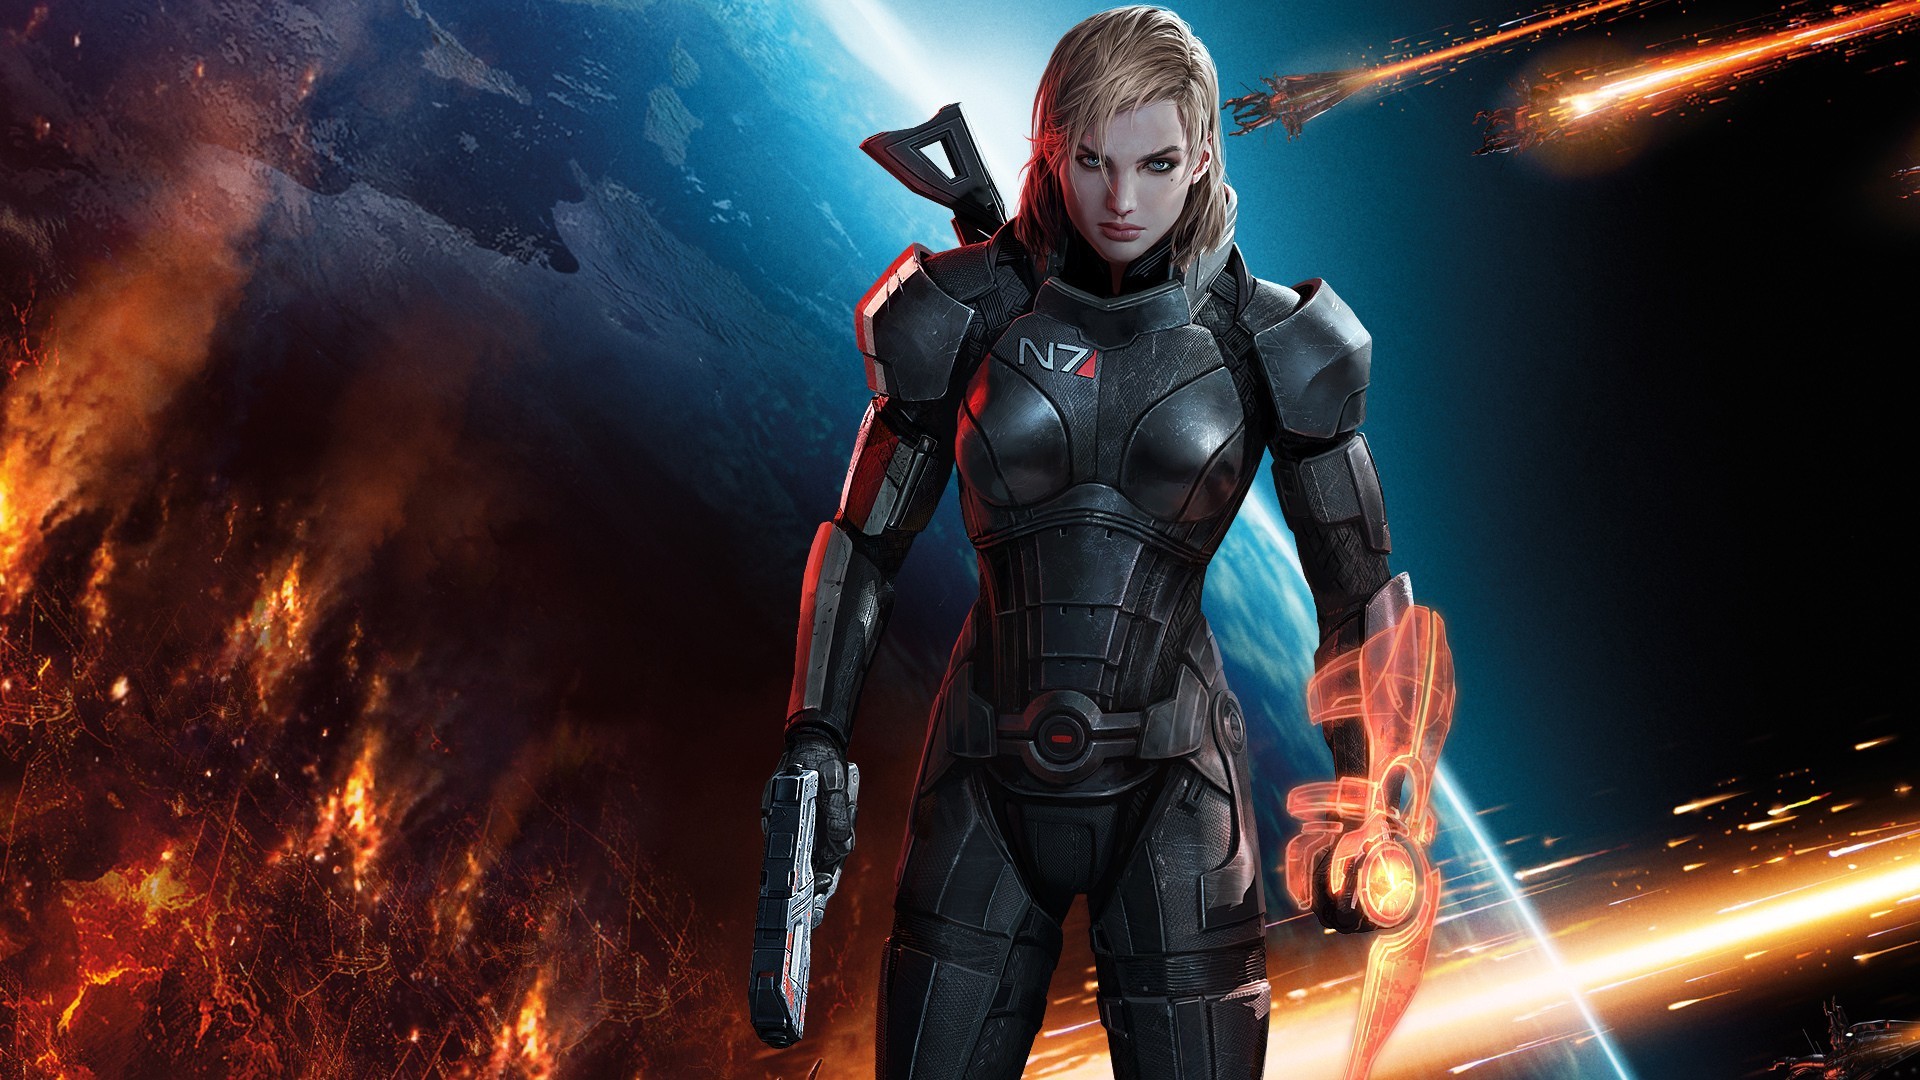 Commander Shepard in Mass Effect 3